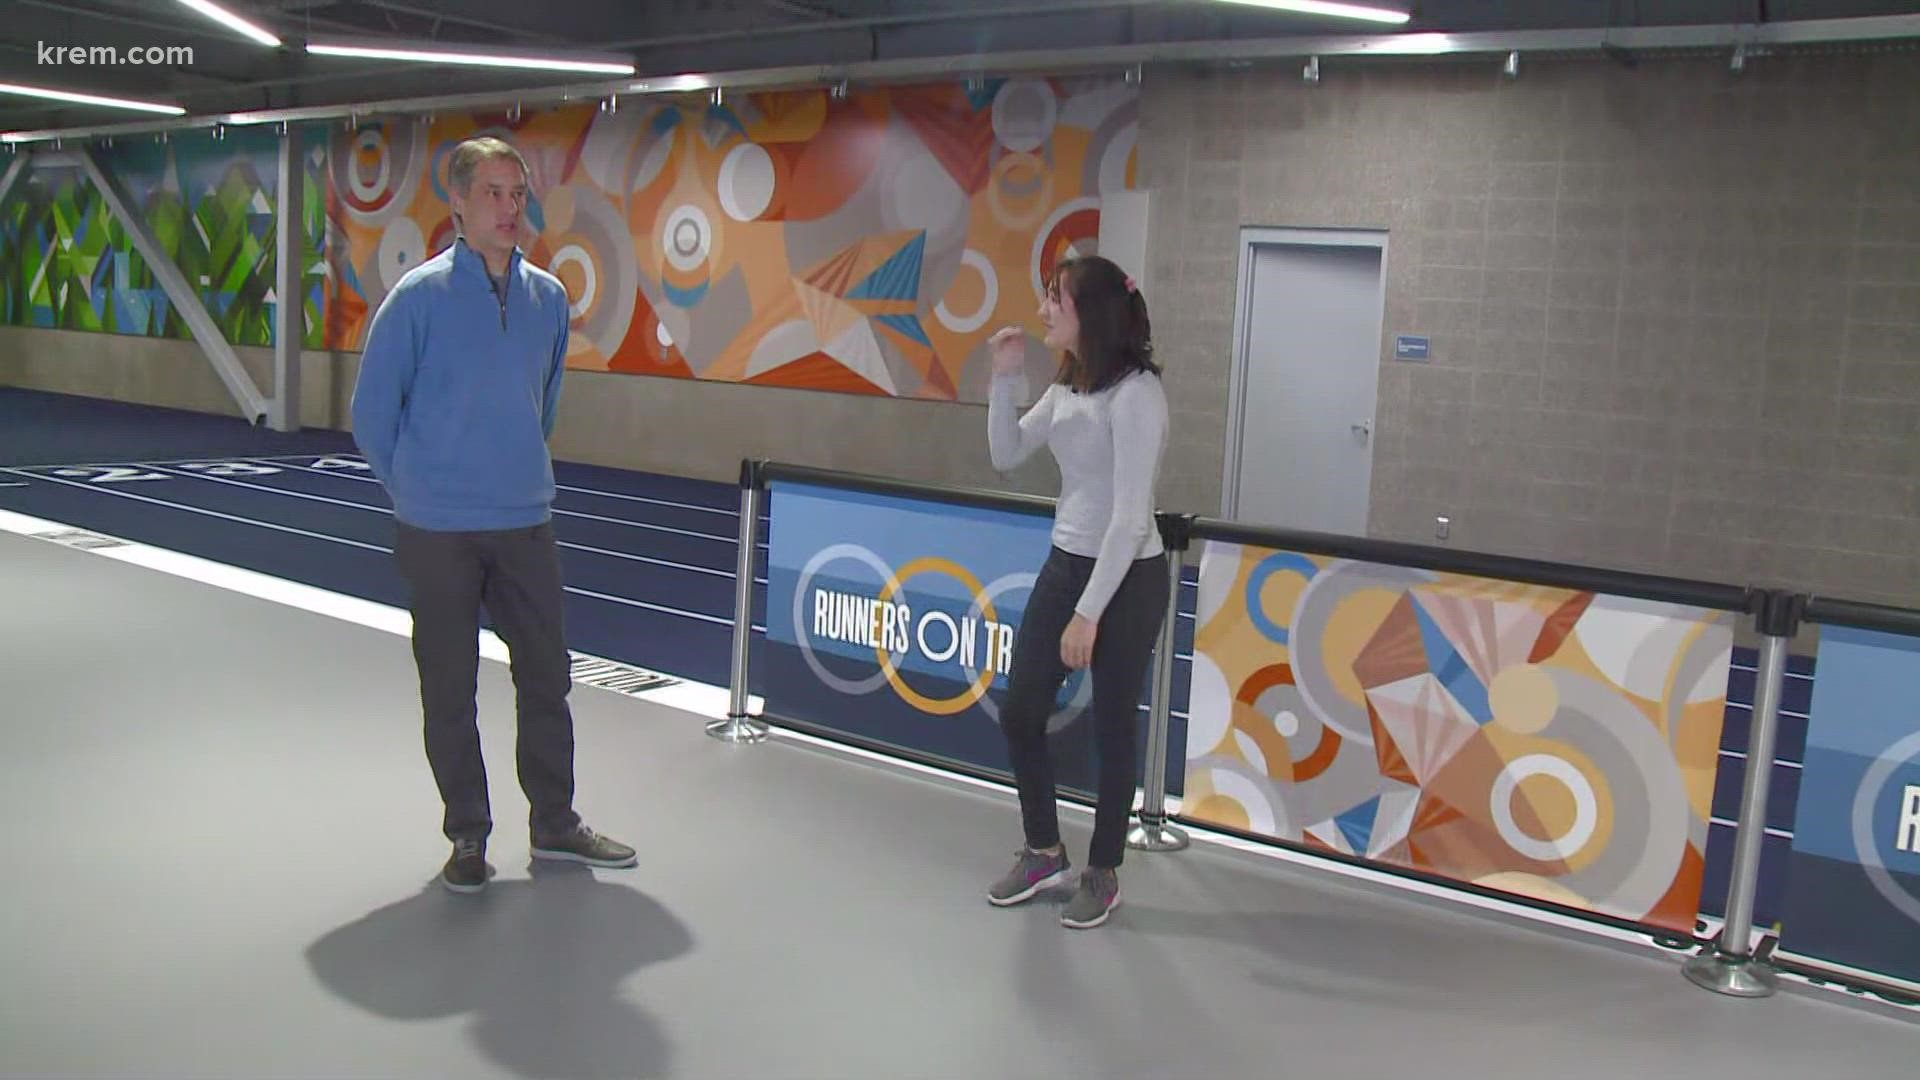 KREM 2's Nicole Hernandez speaks with the Podium's Paul Christiansen on the facility's indoor track.